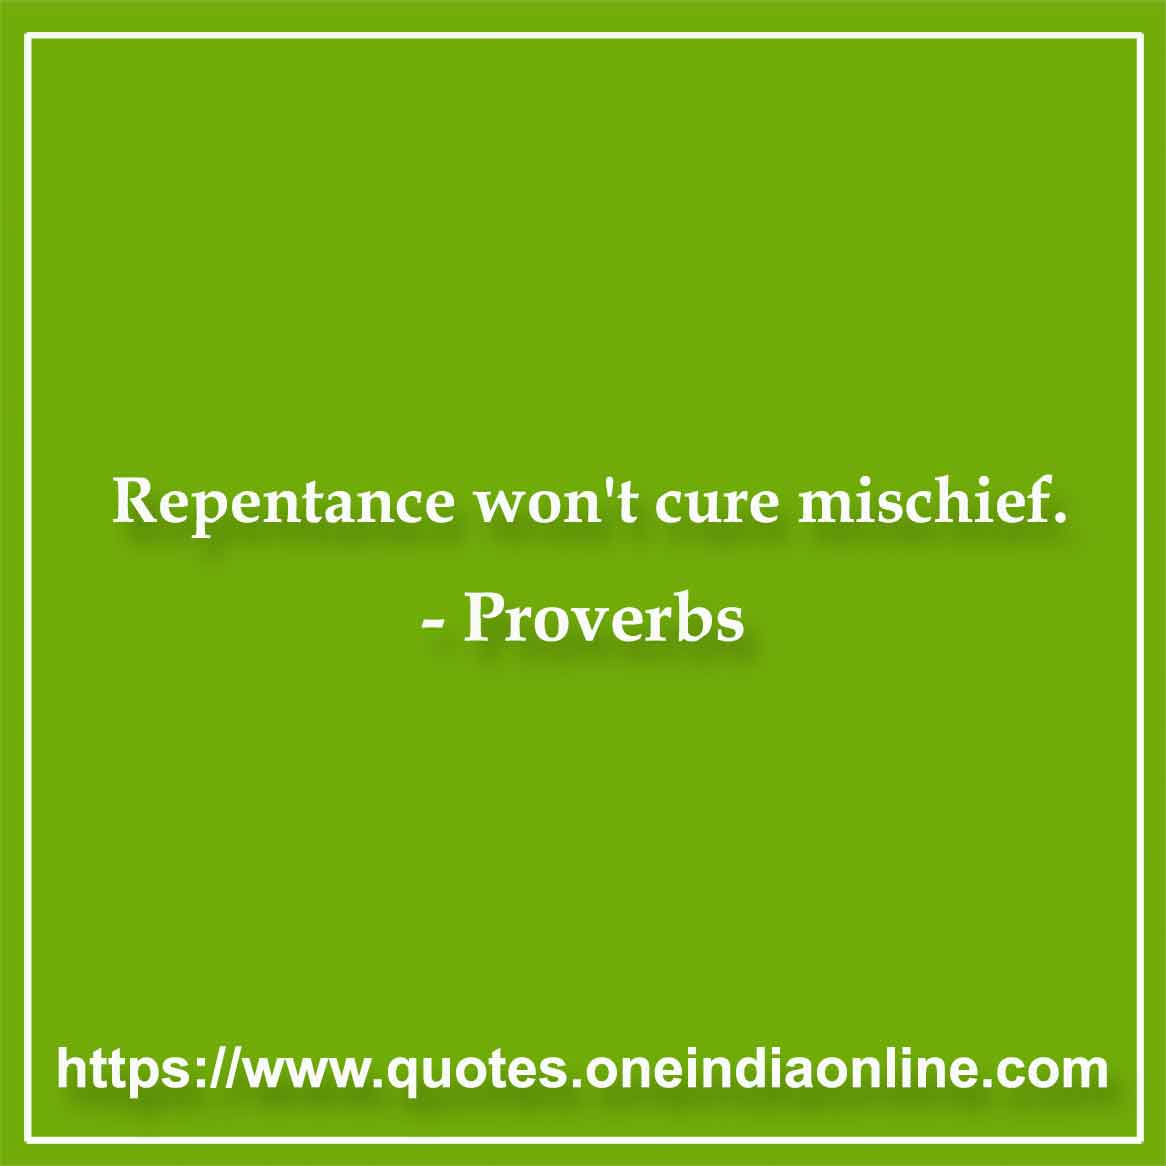 Repentance won't cure mischief.

Gaelic 